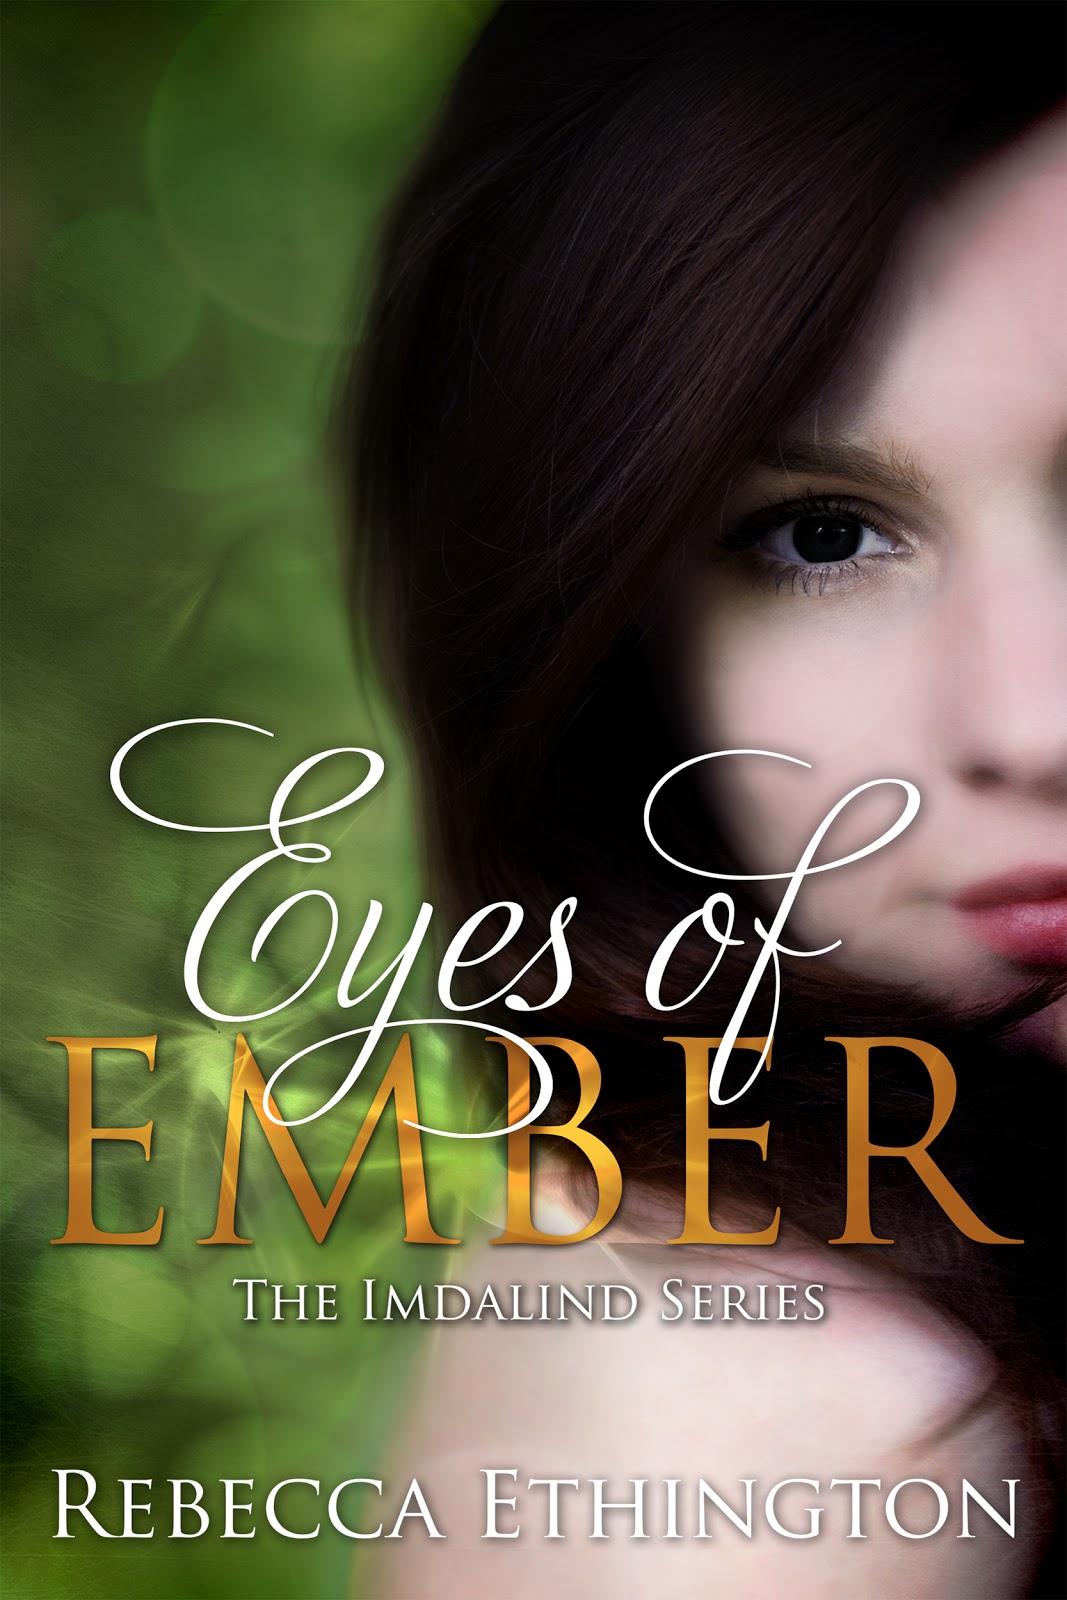 Eyes of Ember by Rebecca L. Ethington